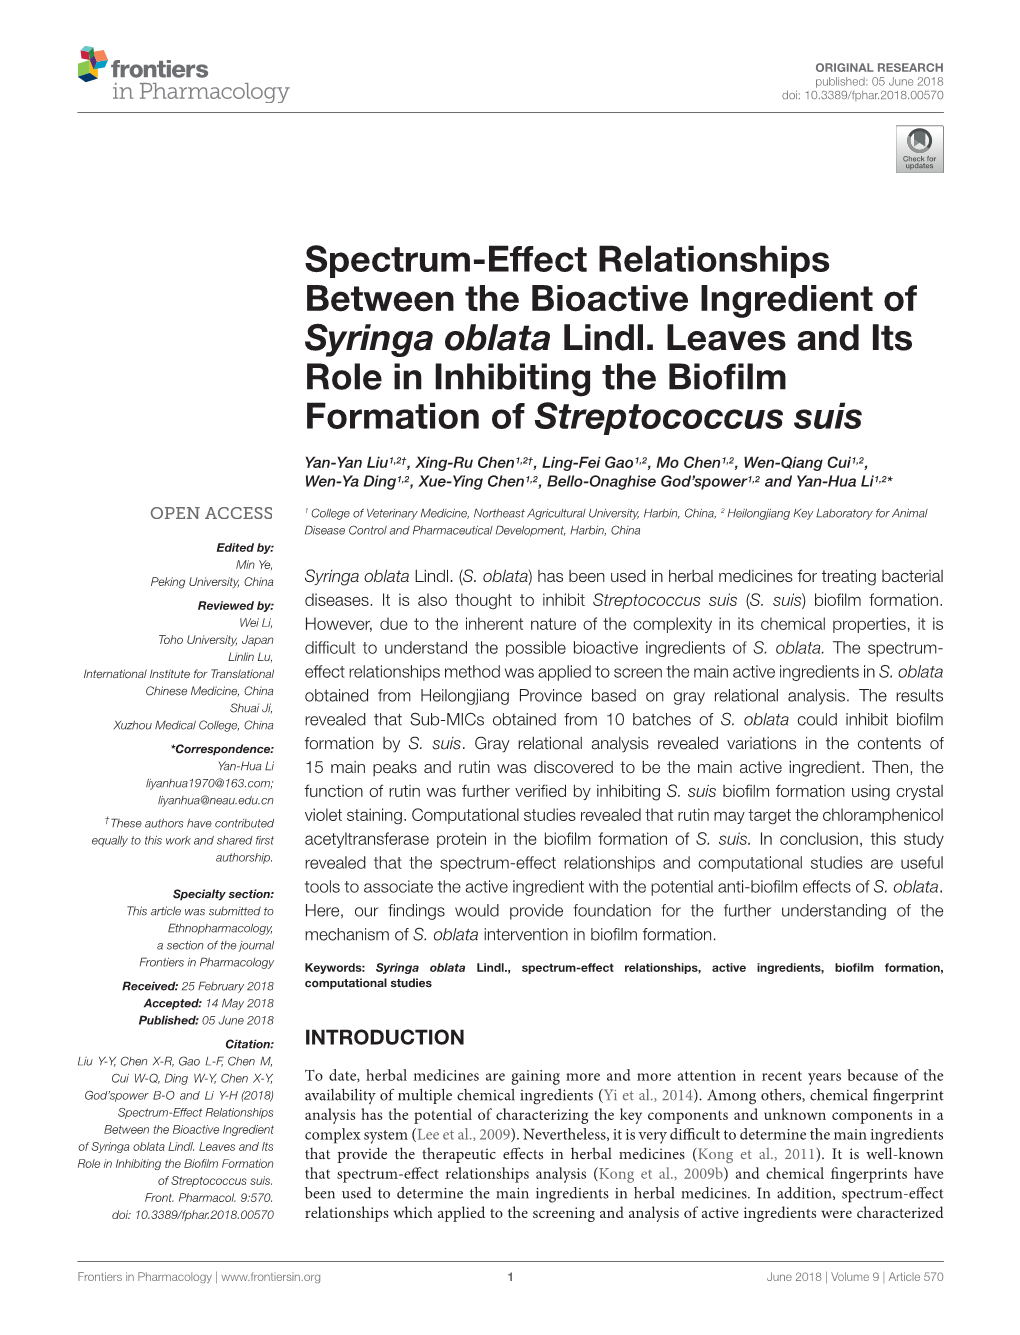 Spectrum-Effect Relationships Between the Bioactive Ingredient of Syringa Oblata Lindl